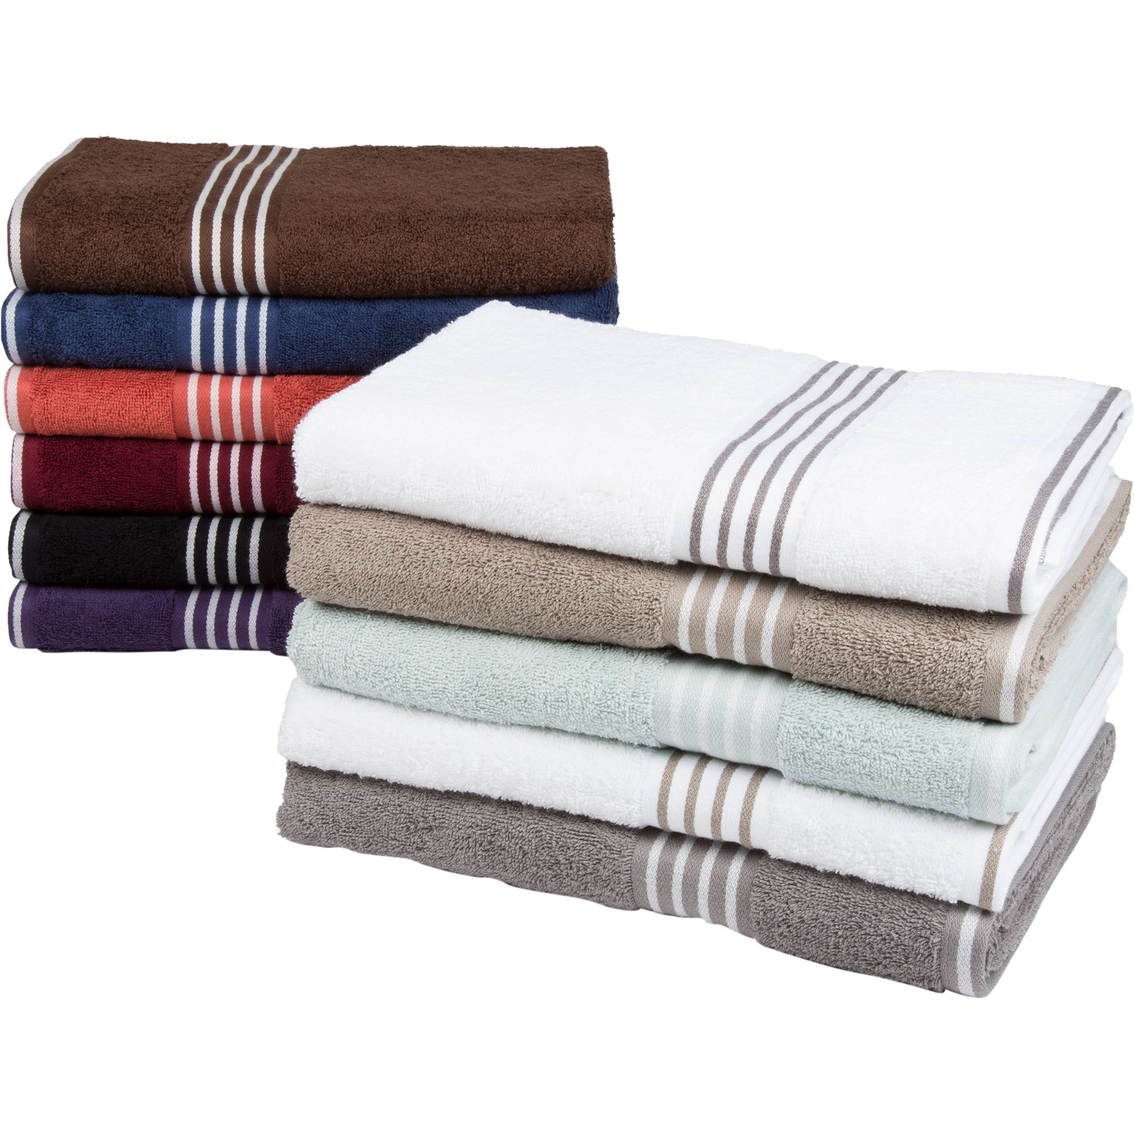 Lavish Home Rio 100% Cotton 8 Pc Towel Set - Image 4 of 4